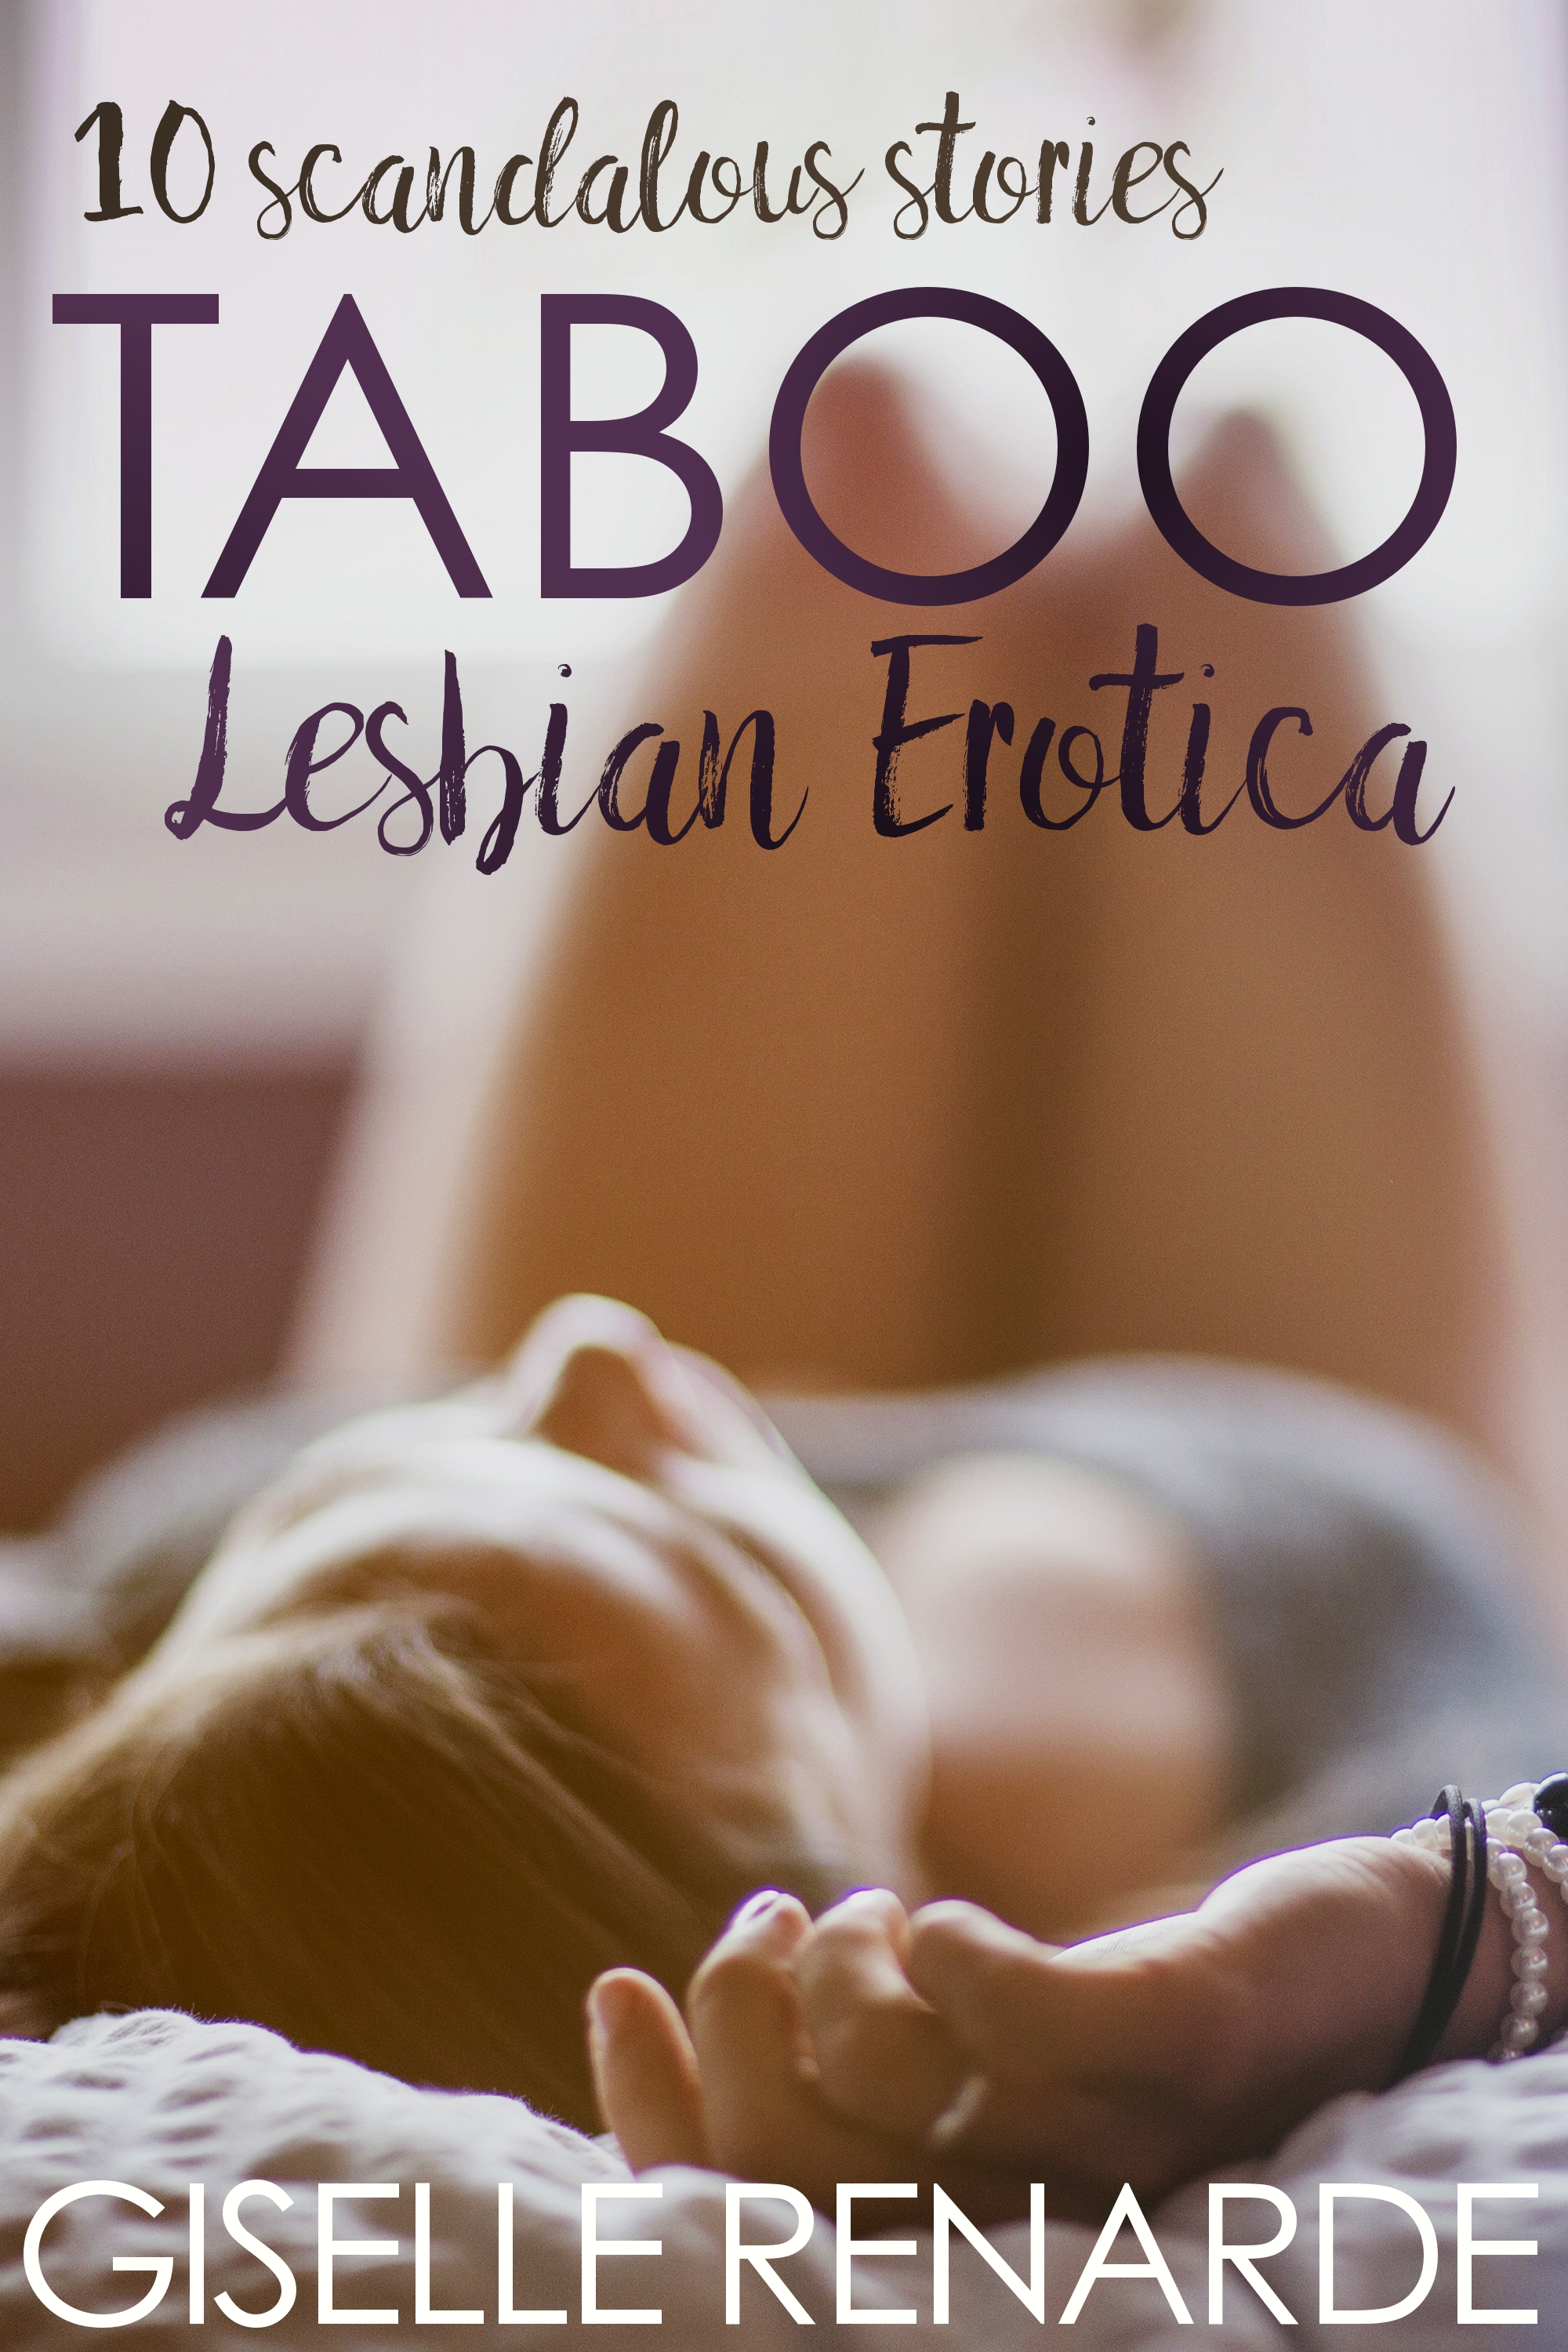 Lesbian Erotica Stories